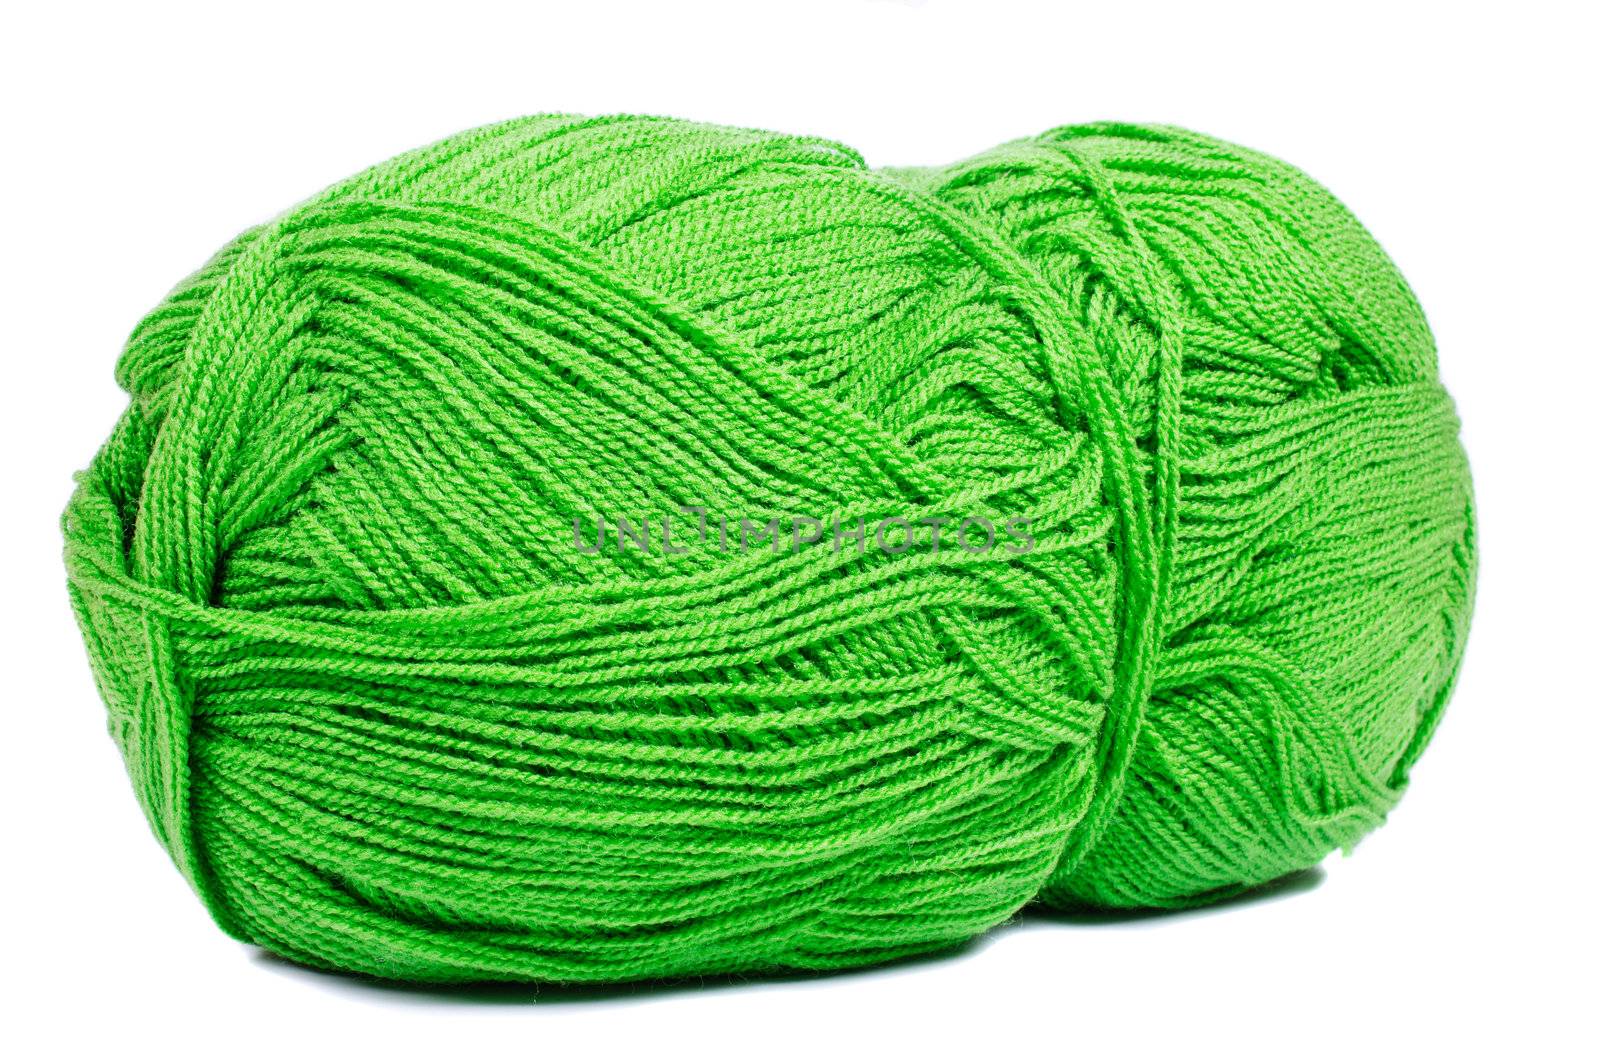 Green thread ball by Nanisimova